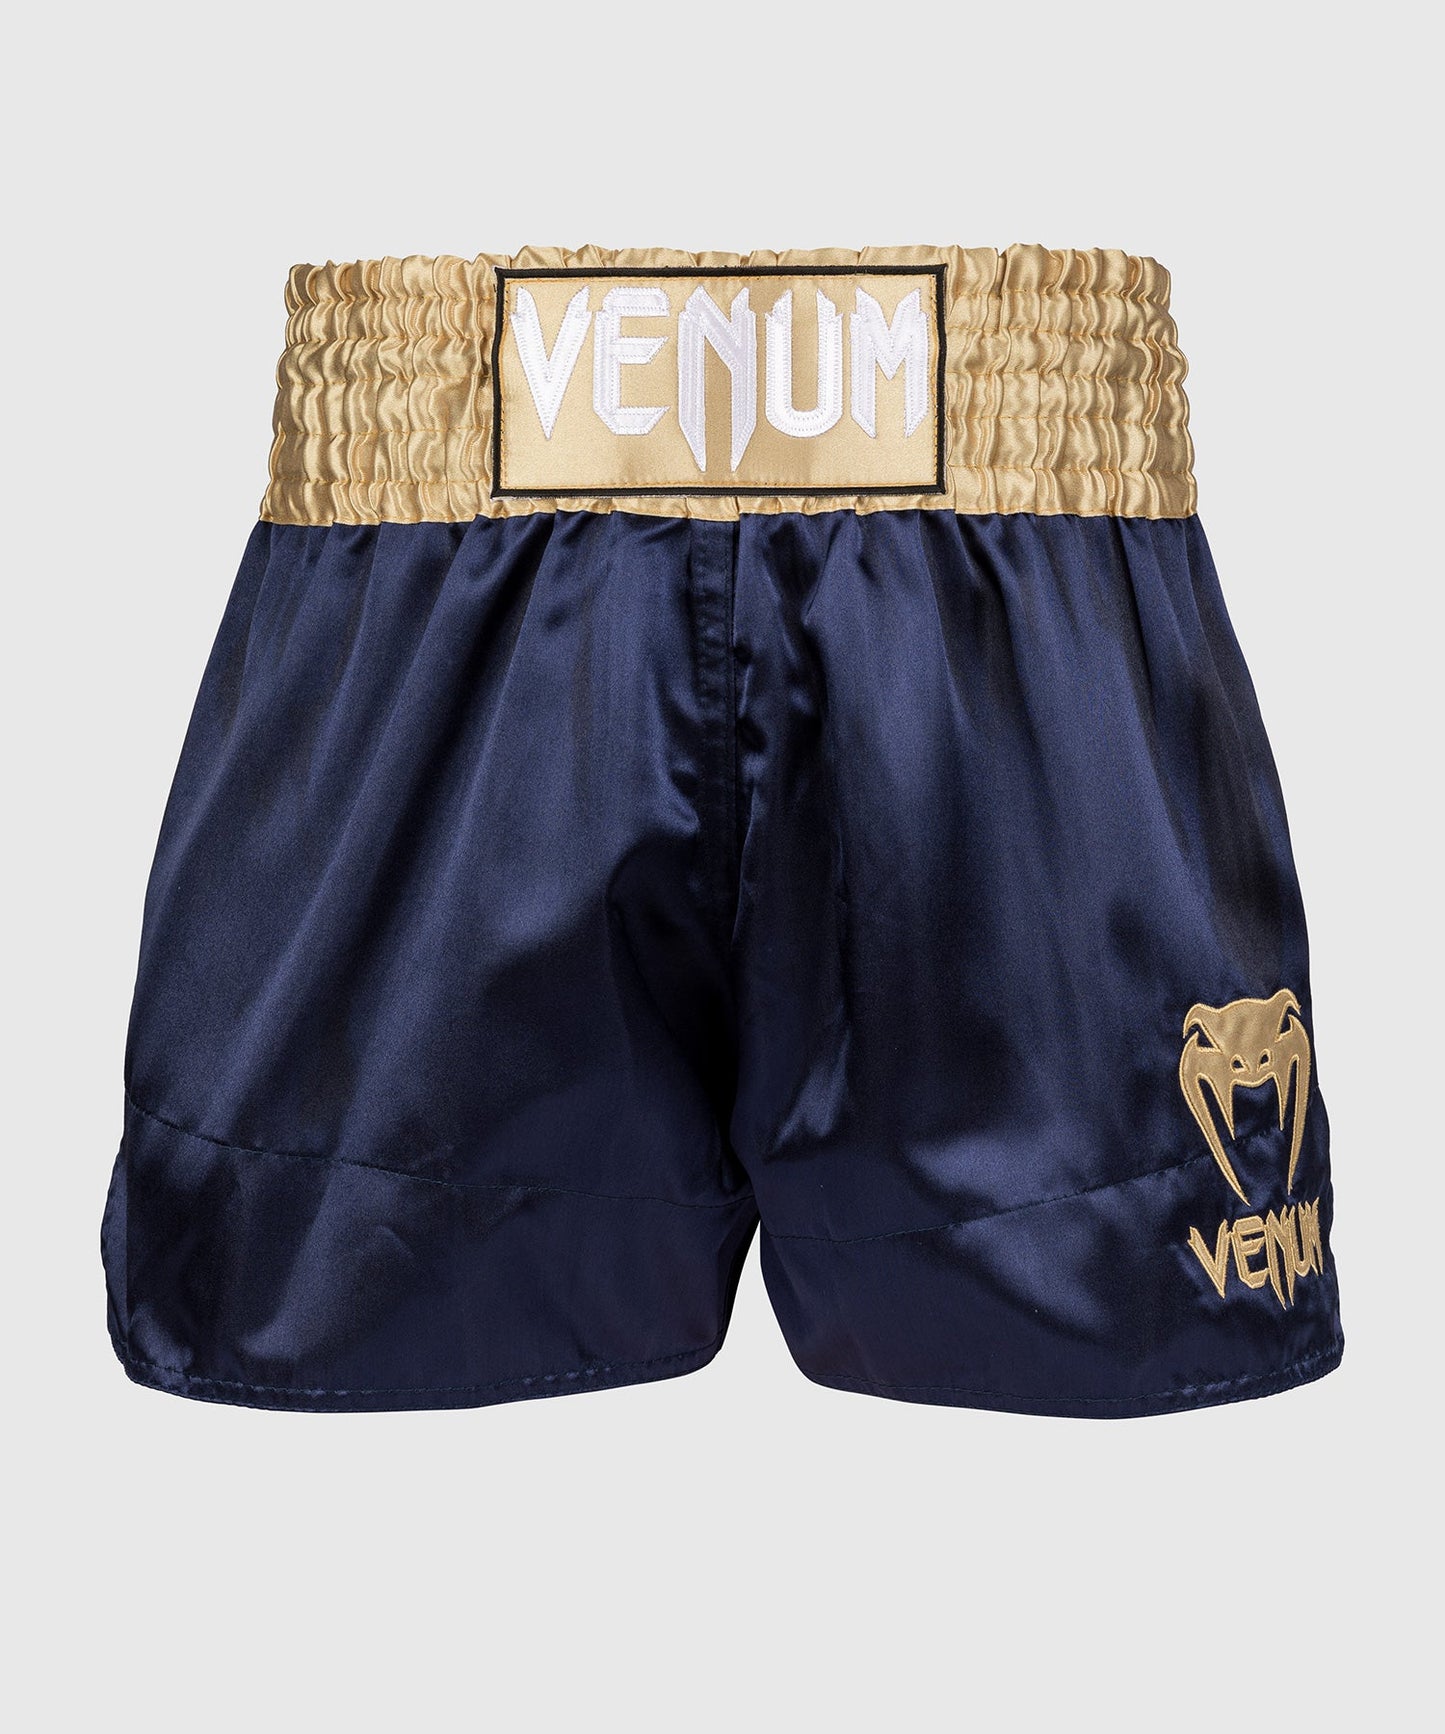 Venum Classic Muay Thai Shorts - Navy Blue/Gold